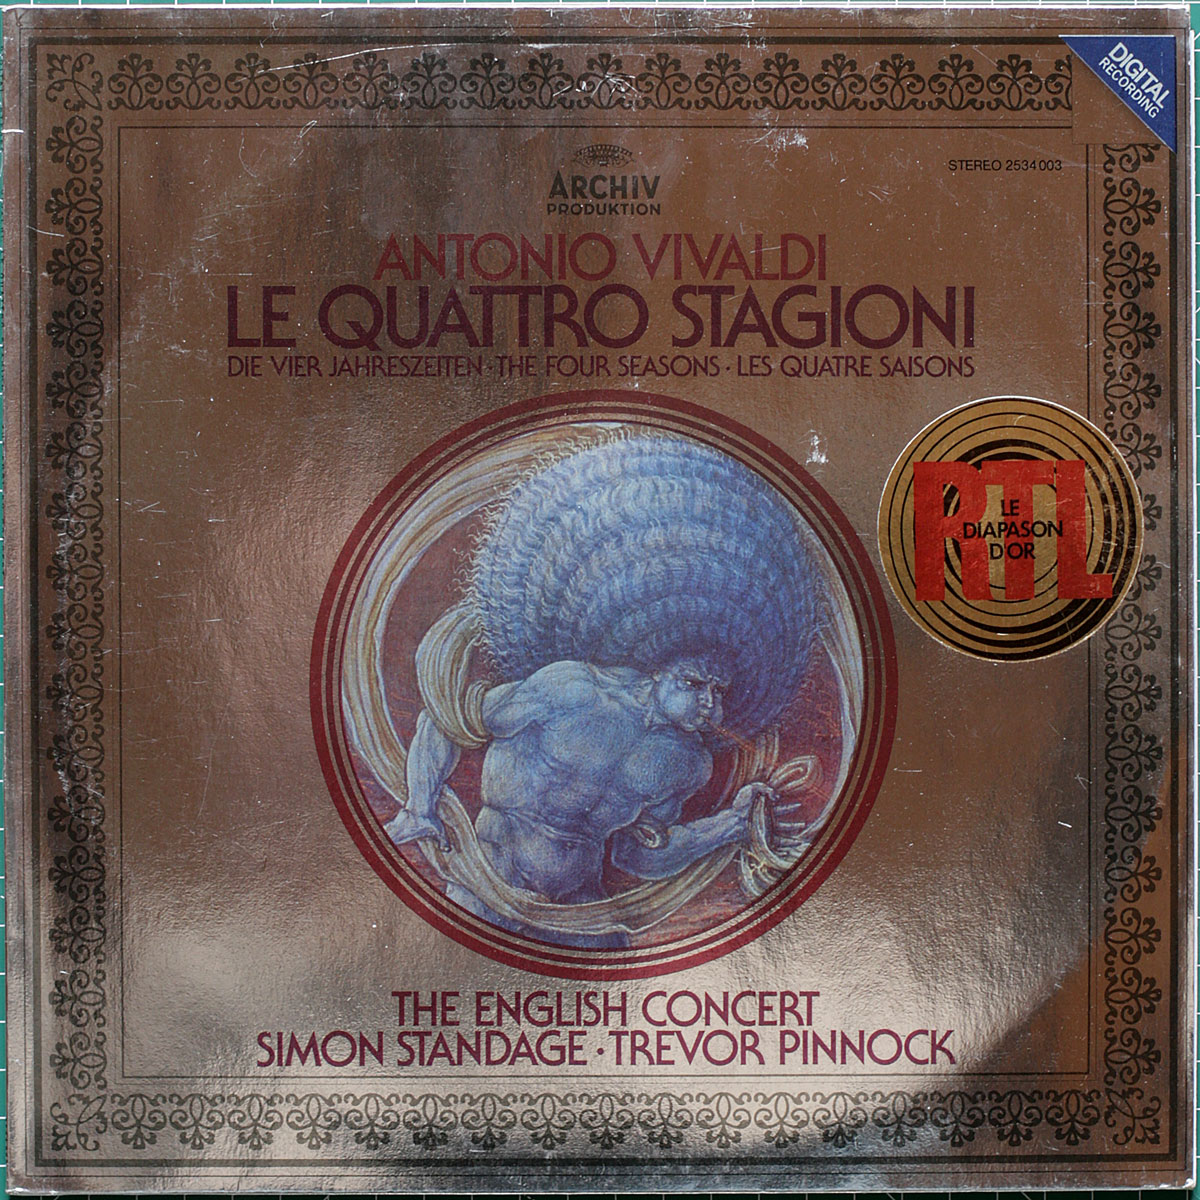 Vivaldi • Les quatre saisons • Le quattro stagioni • Archiv Produktion 2534 003 Digital • Simon Standage • The English Concert • Trevor Pinnock